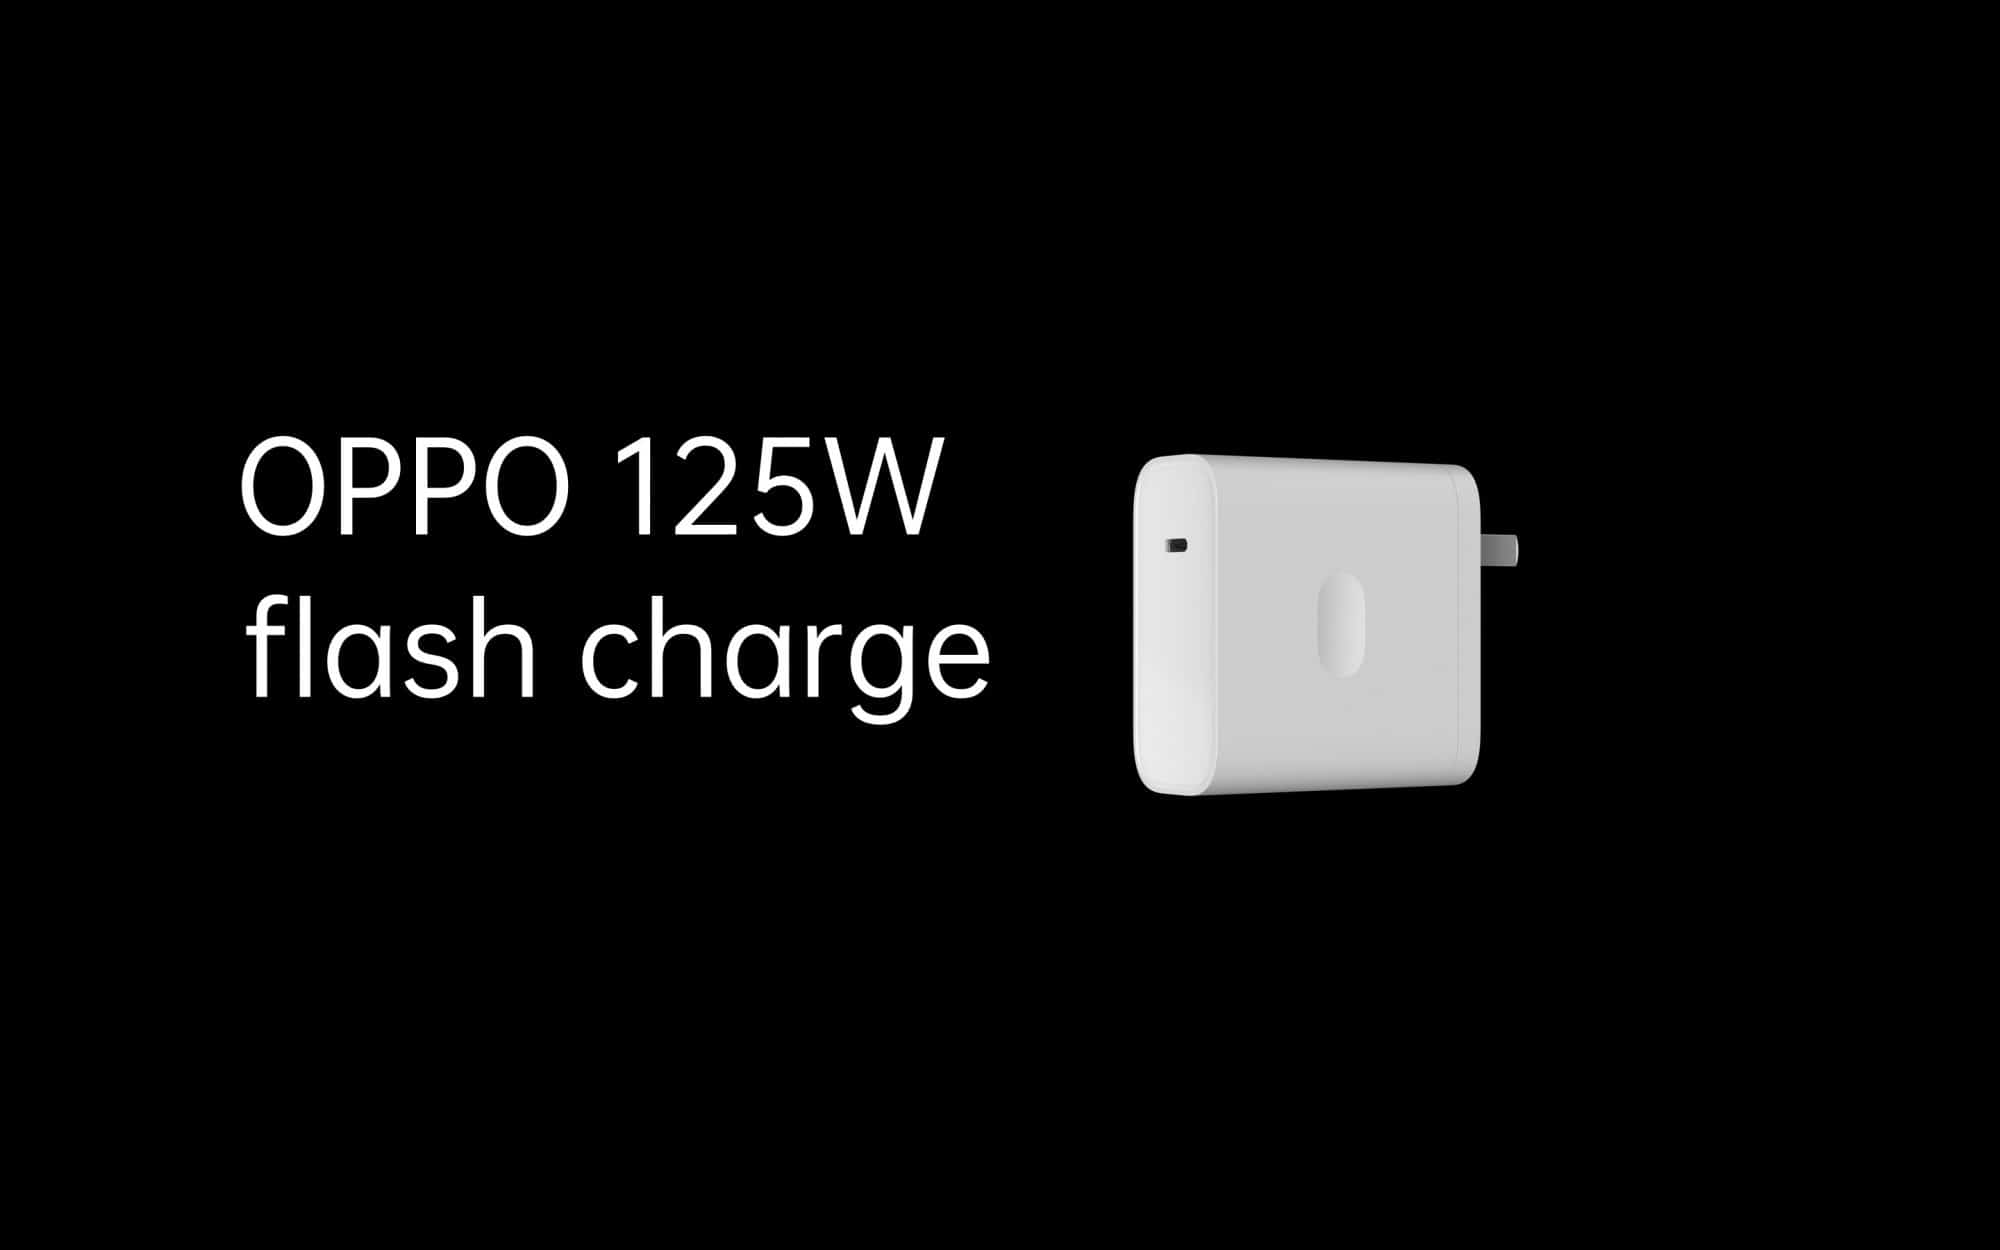 OPPO เปิดตัวเทคโนโลยี 125W Flash charge พร้อมชาร์จไร้สาย 65W AirVOOC wireless flash charge และ 50W mini SuperVOOC charger 3